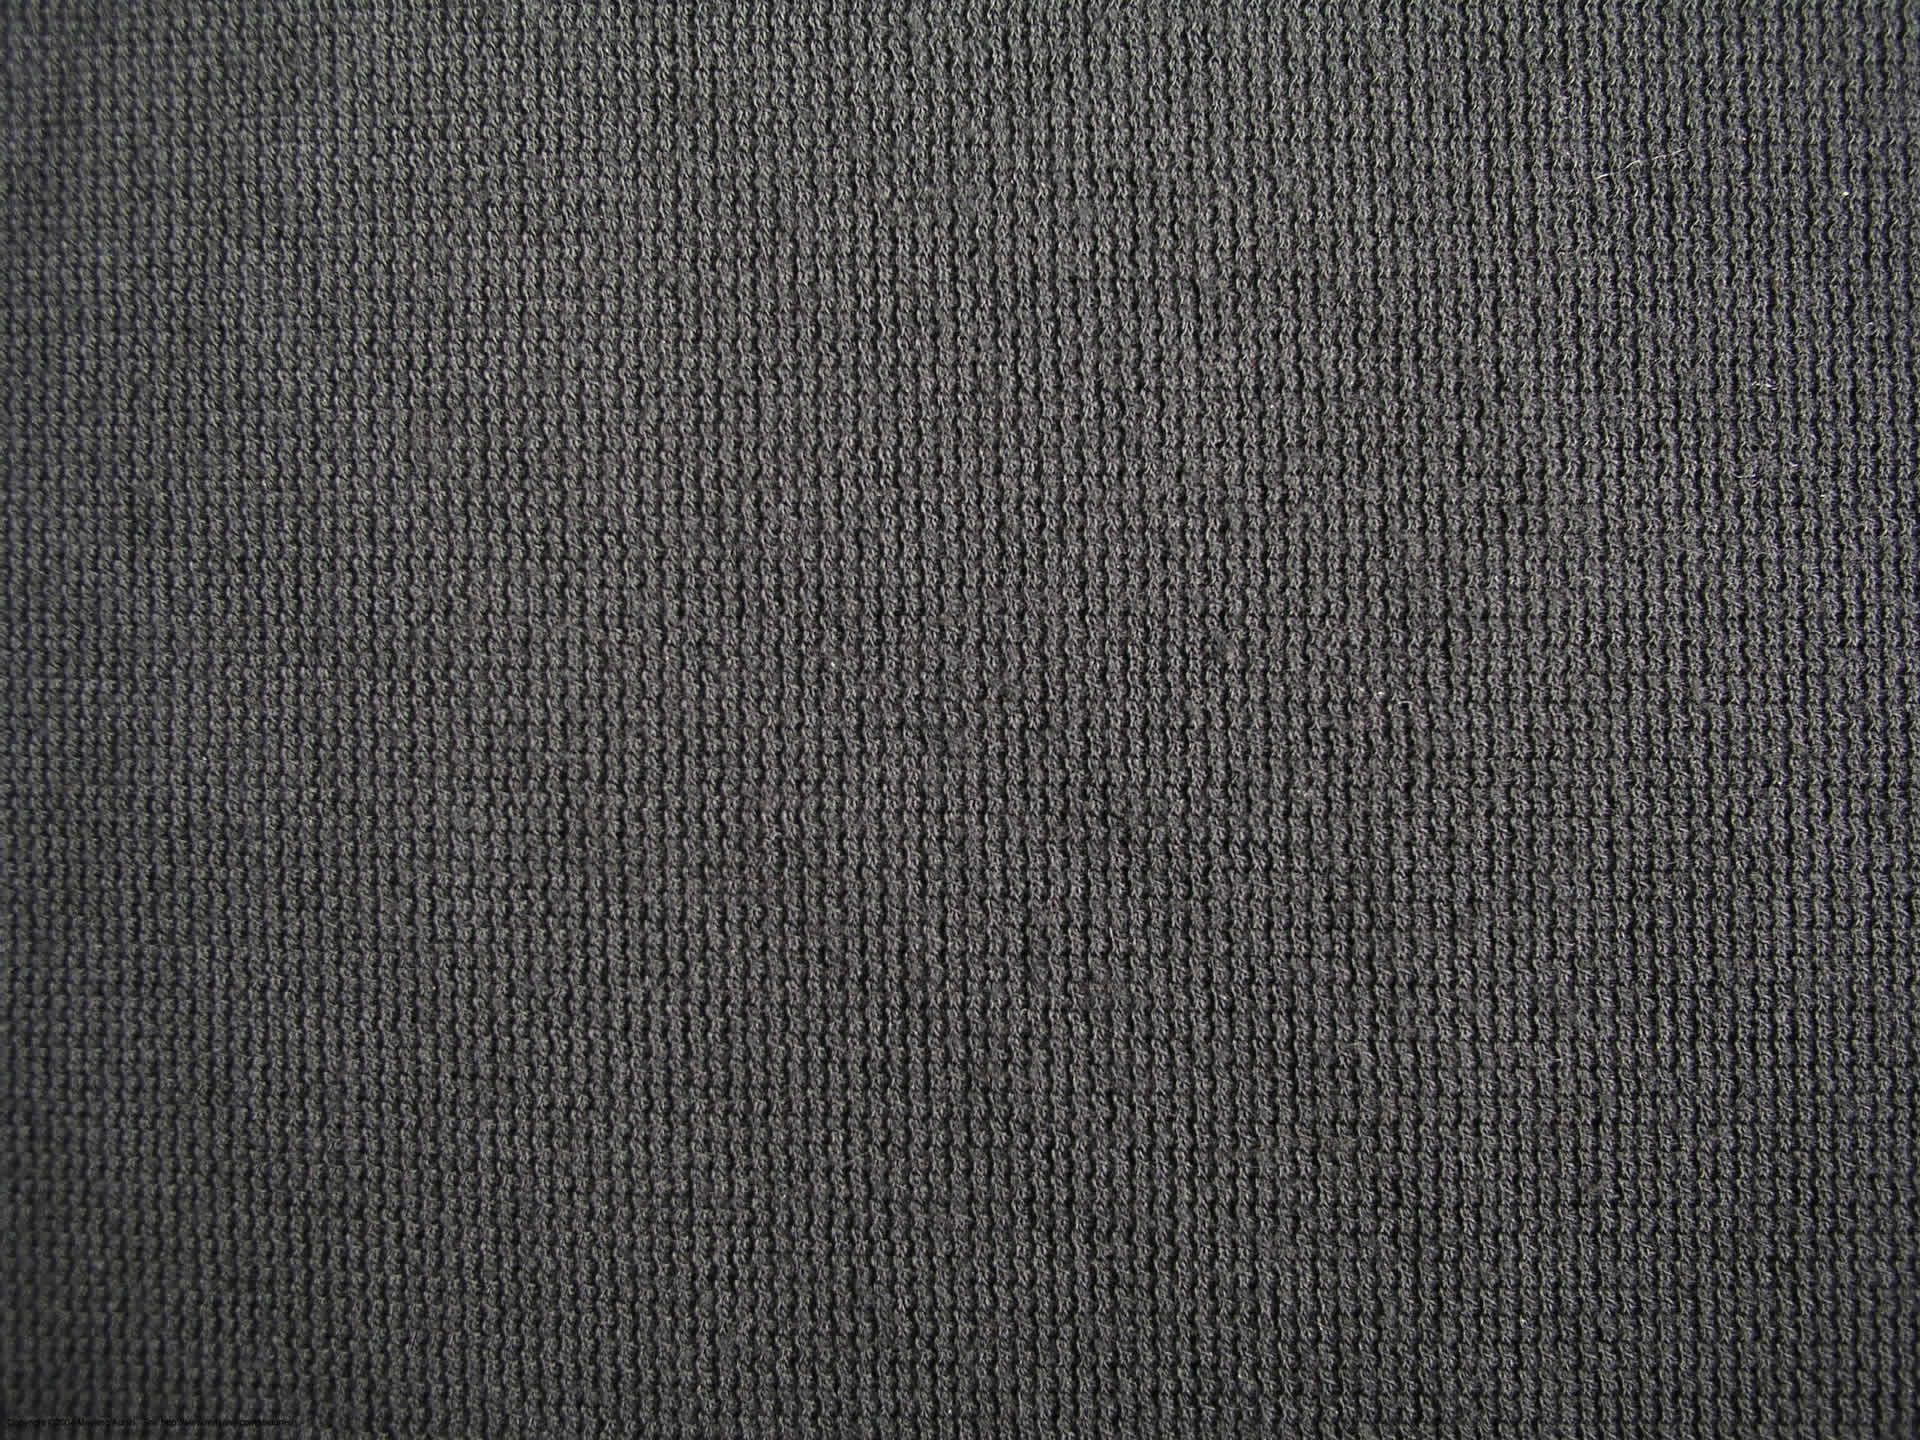 texturas wallpaper,black,brown,pattern,textile,woven fabric